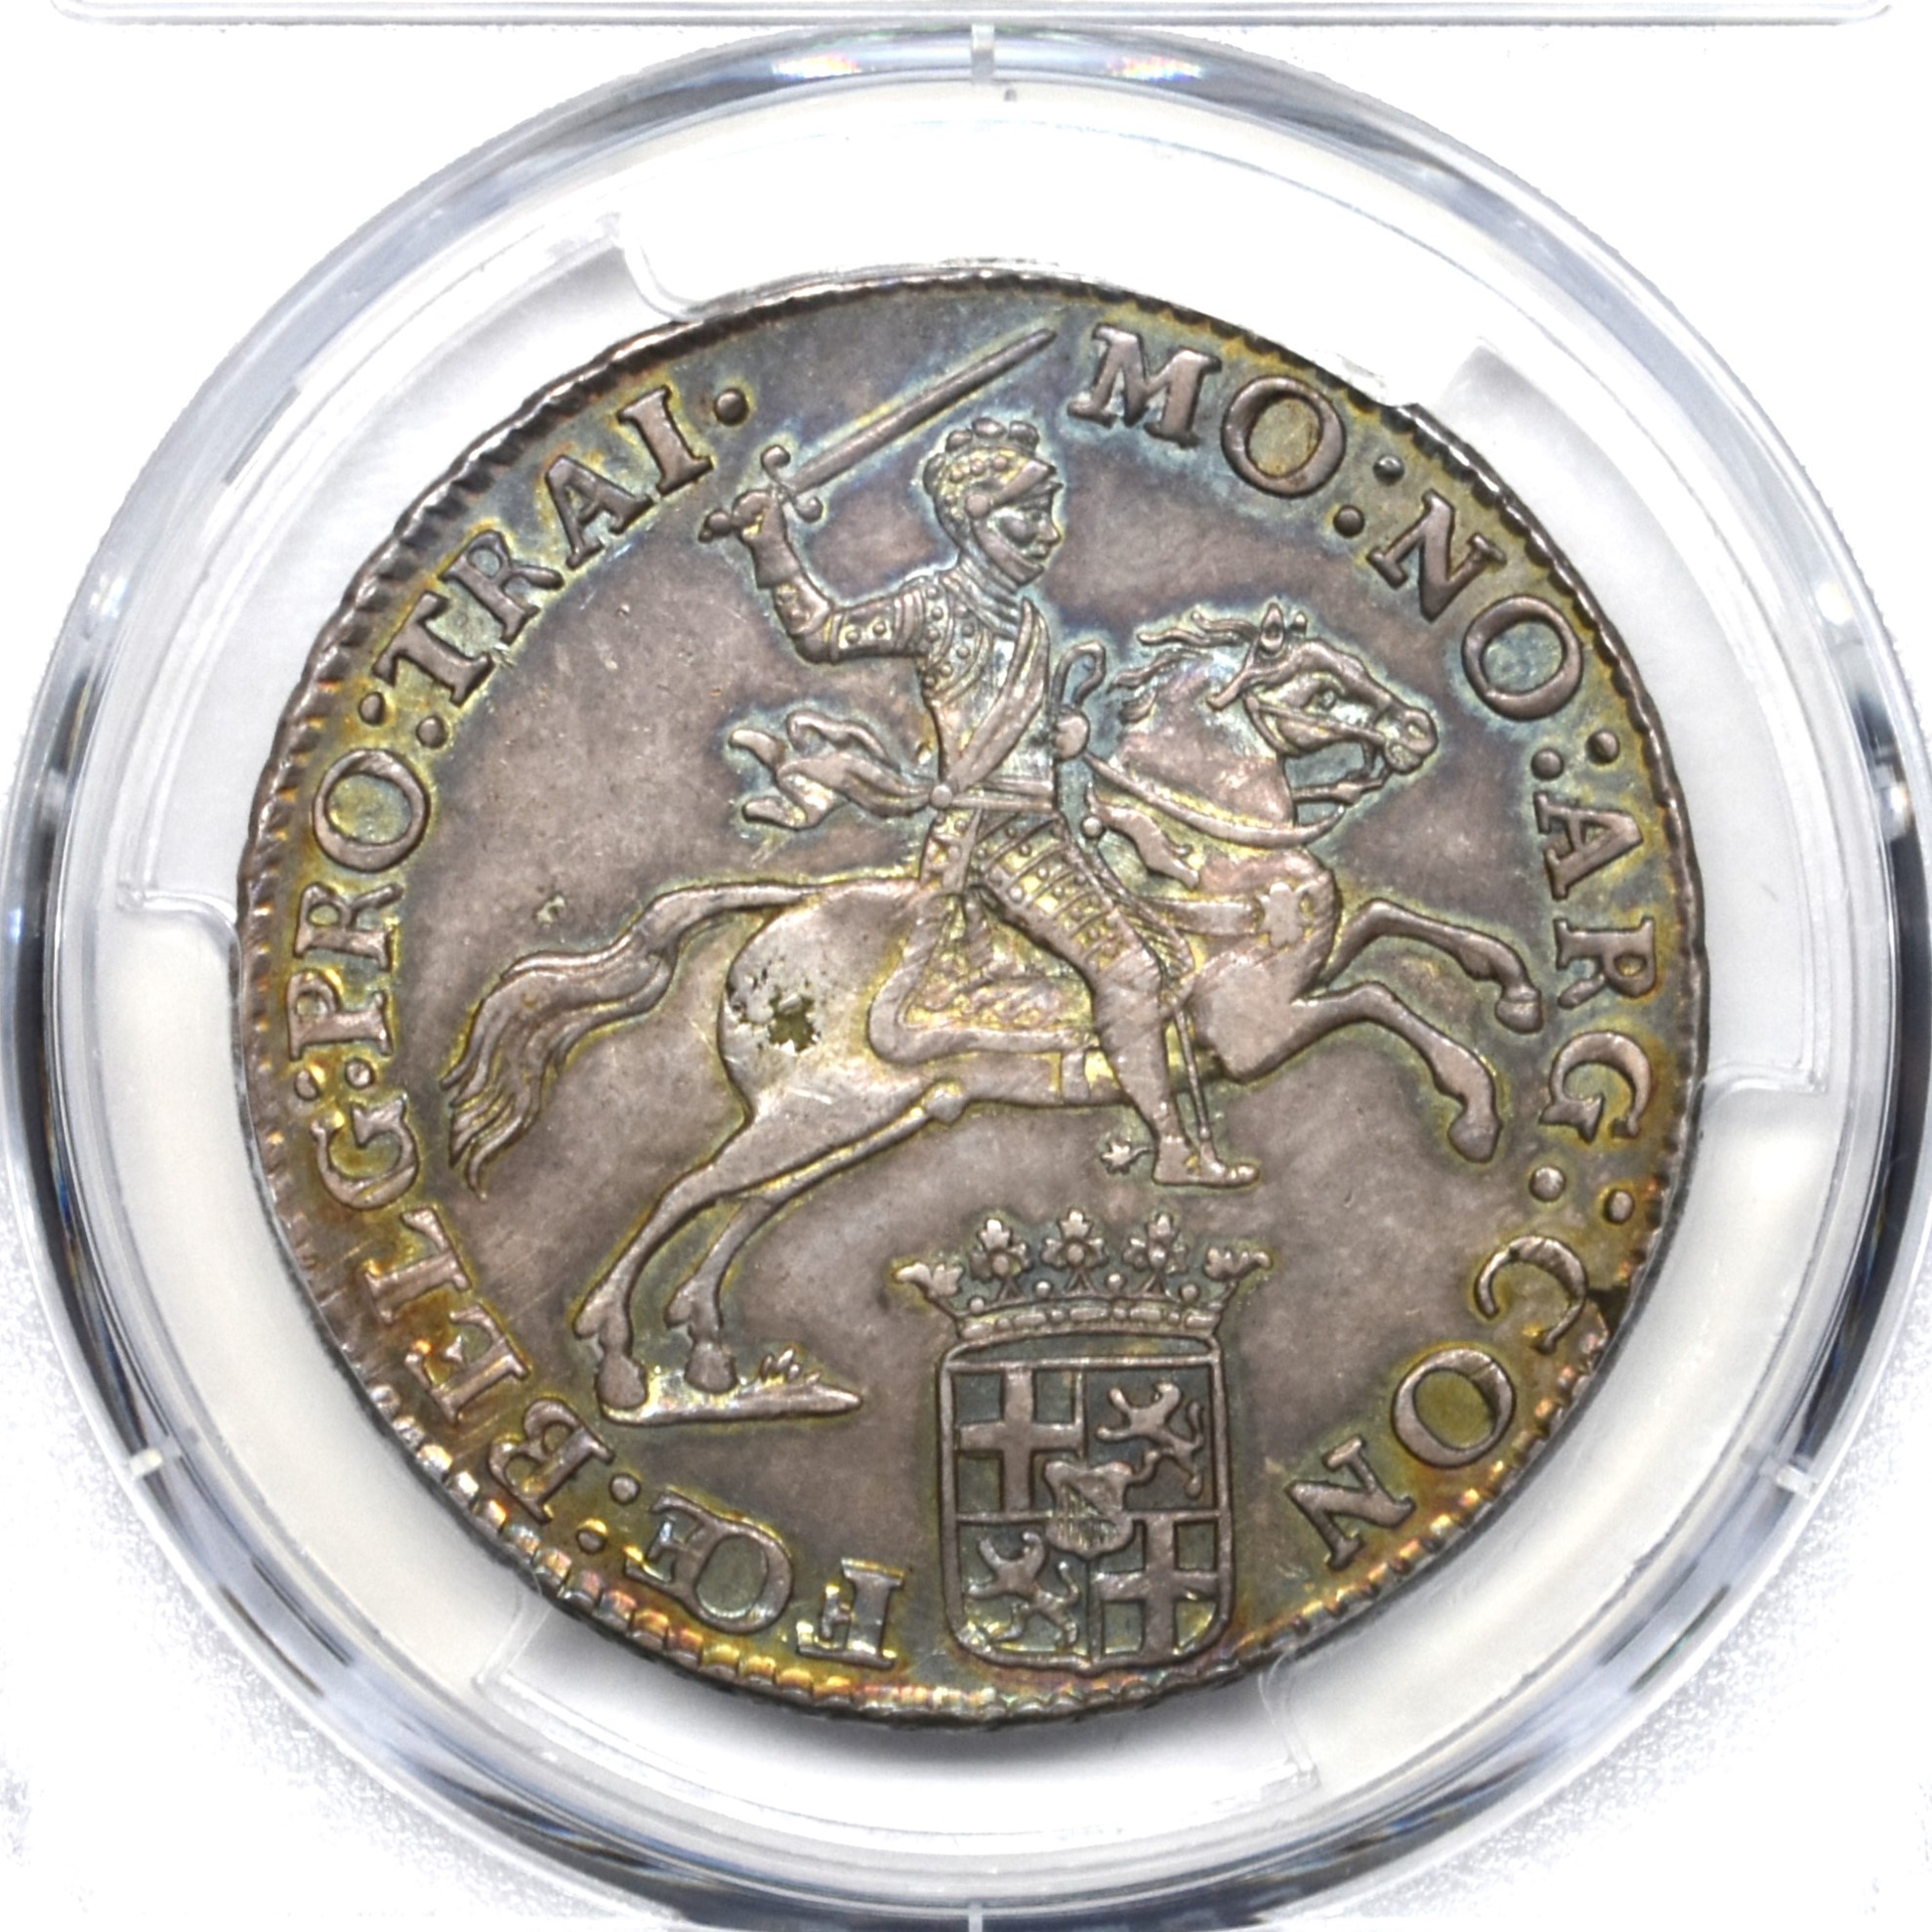 Sold】1764年 ユトレヒト 馬上の騎士 1/2デュカトン銀貨 MS62 PCGS